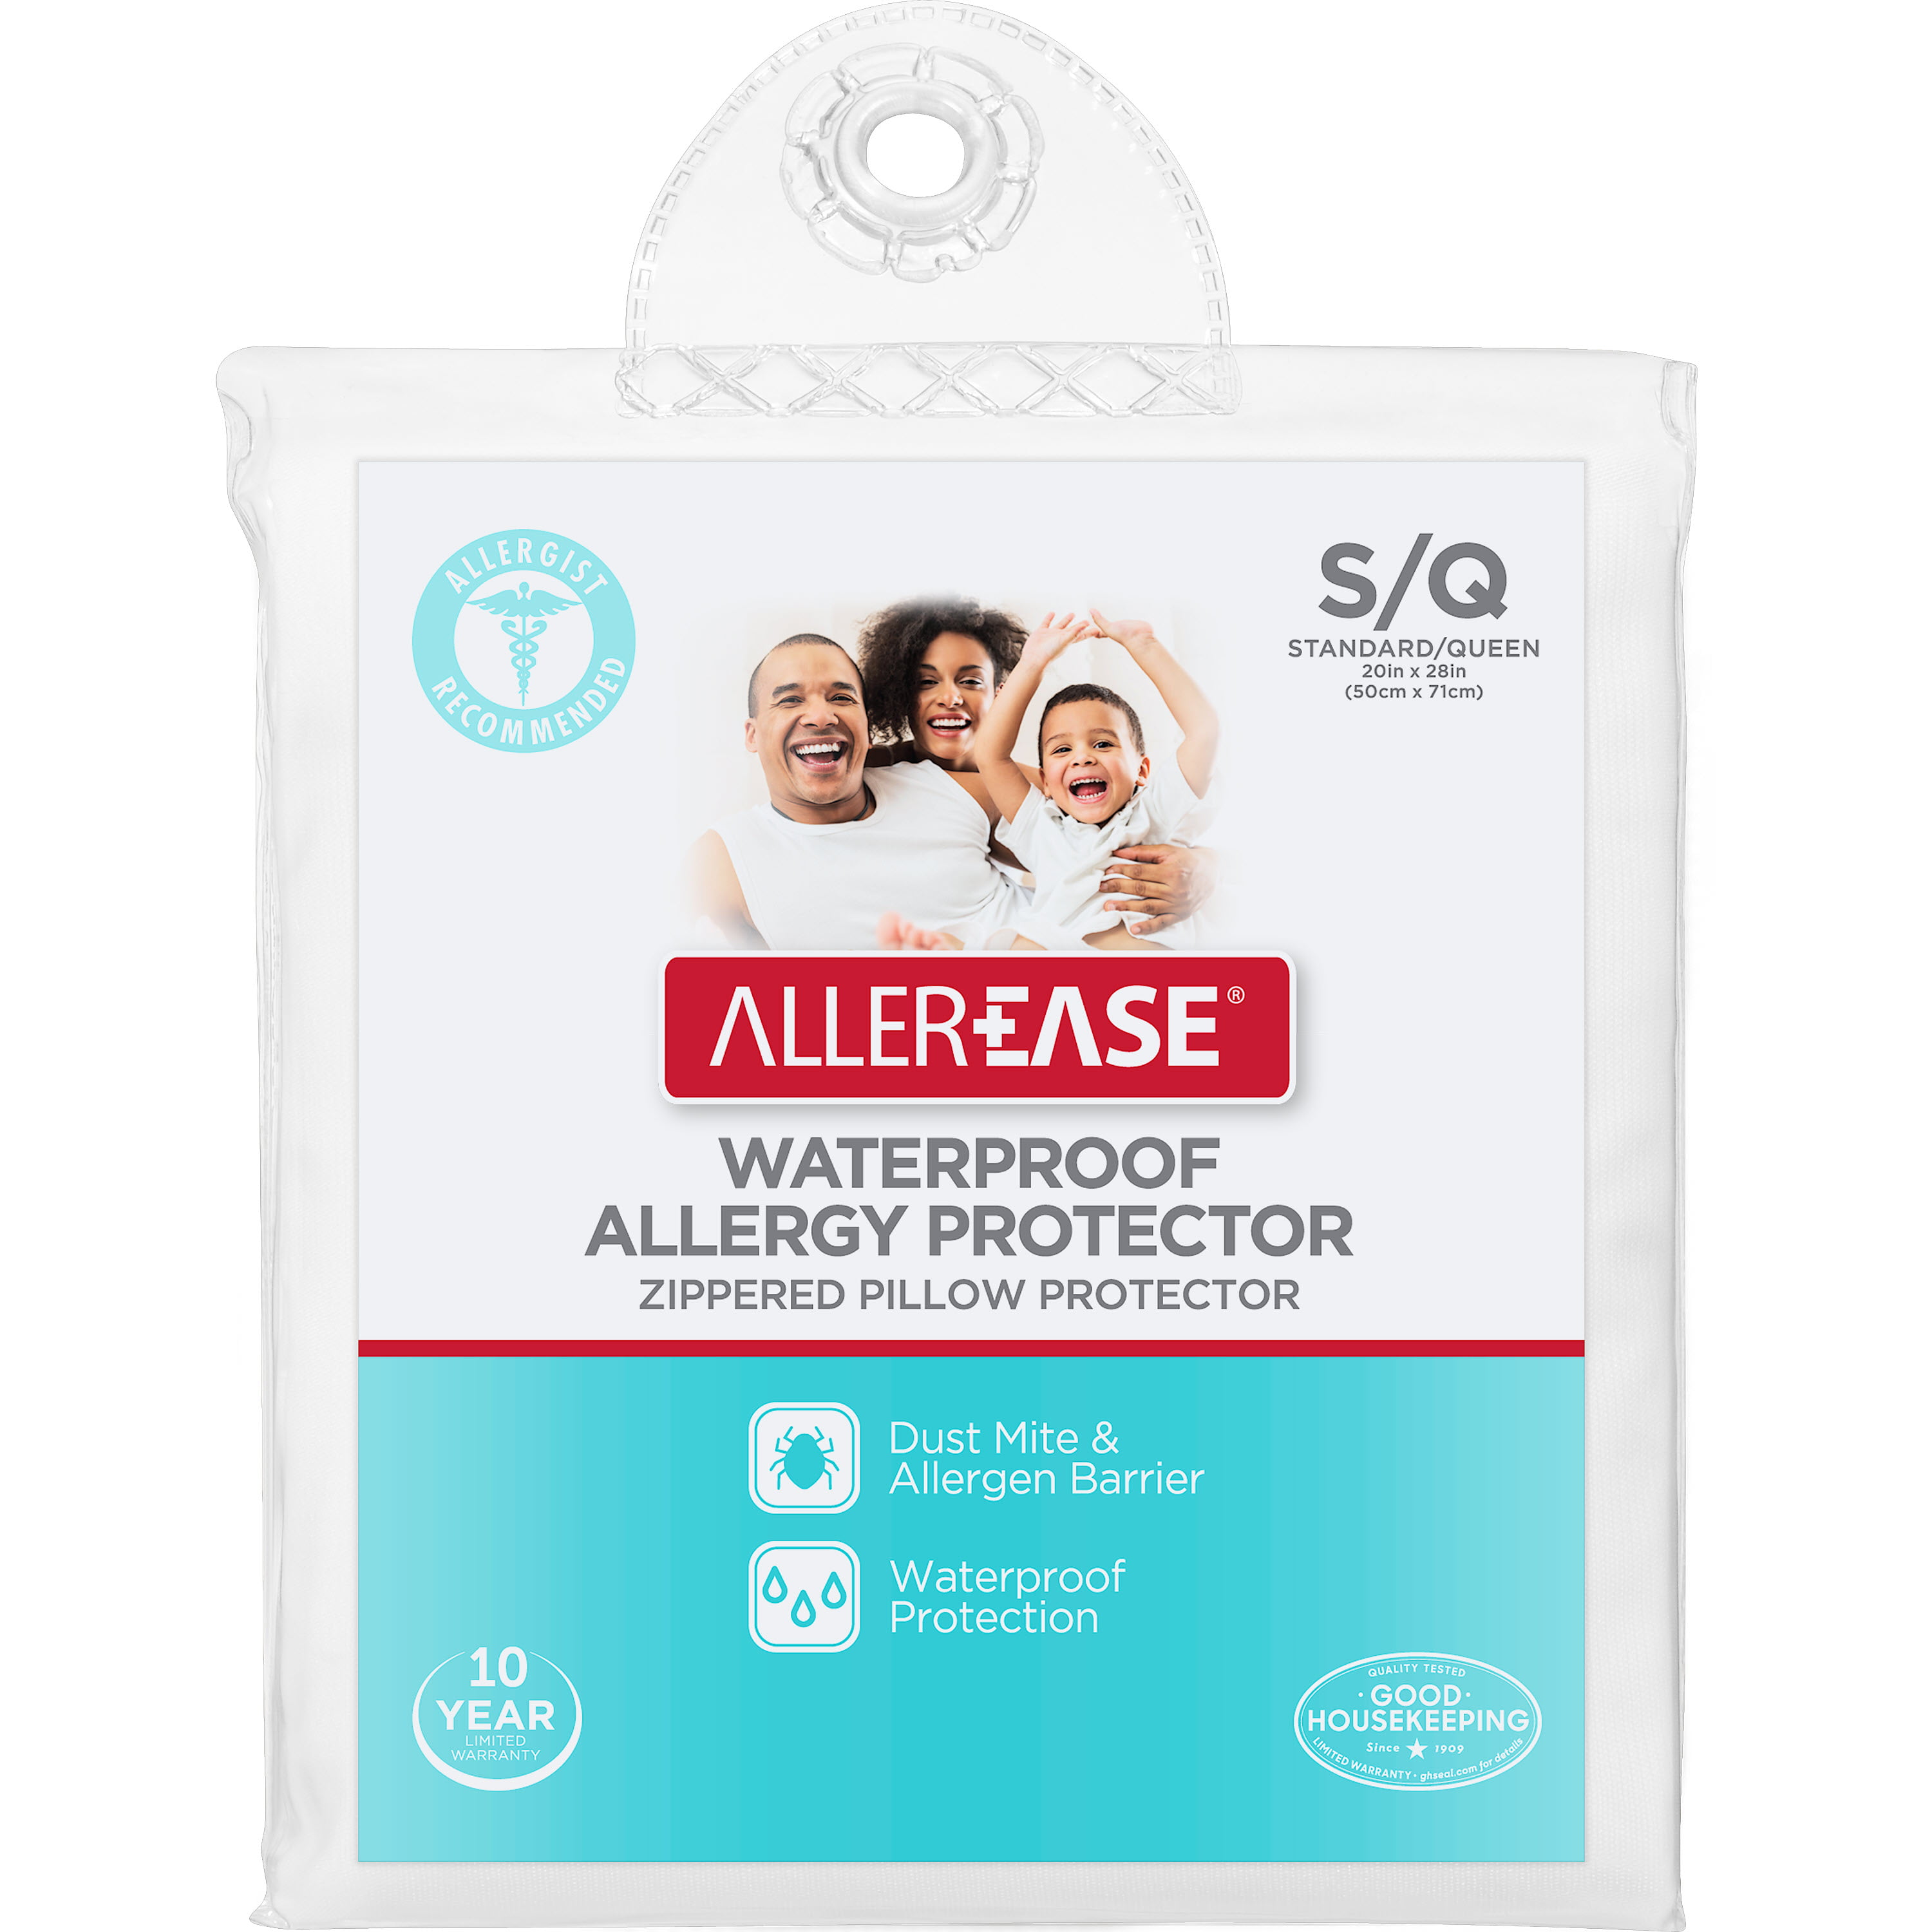 AllerEase Waterproof Allergy Protector 